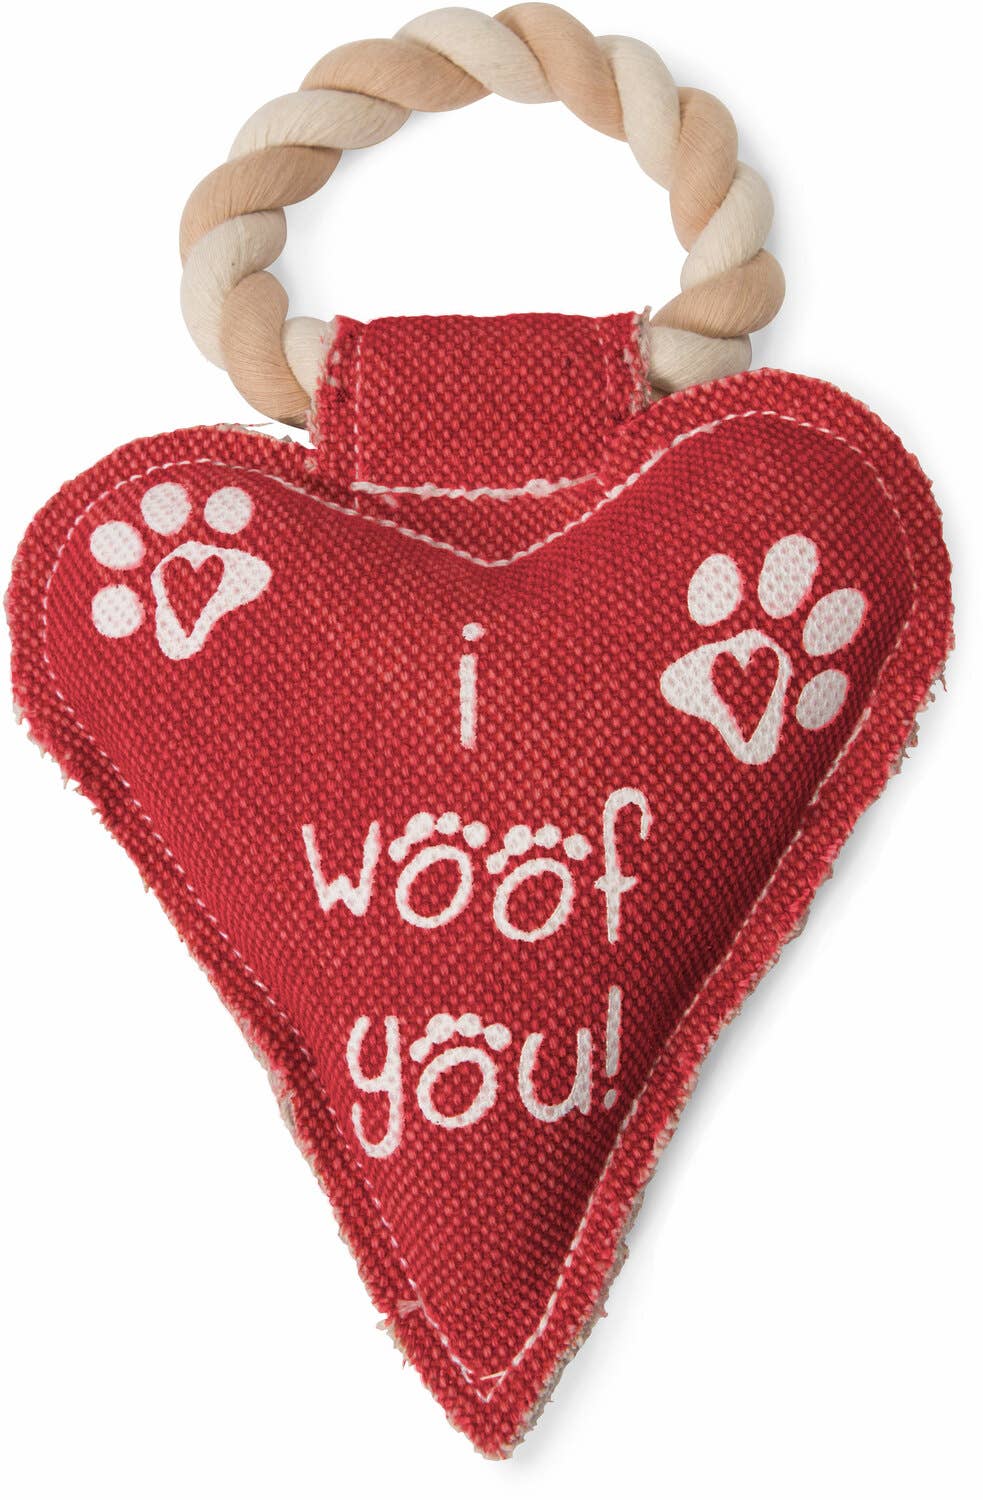 I Woof You Heart Shaped Sturdy Canvas Tug of War Dog Toy